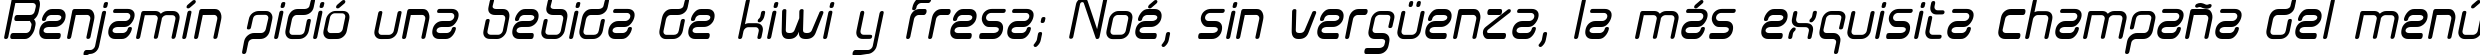 Пример написания шрифтом Aunchanted Bold Oblique текста на испанском